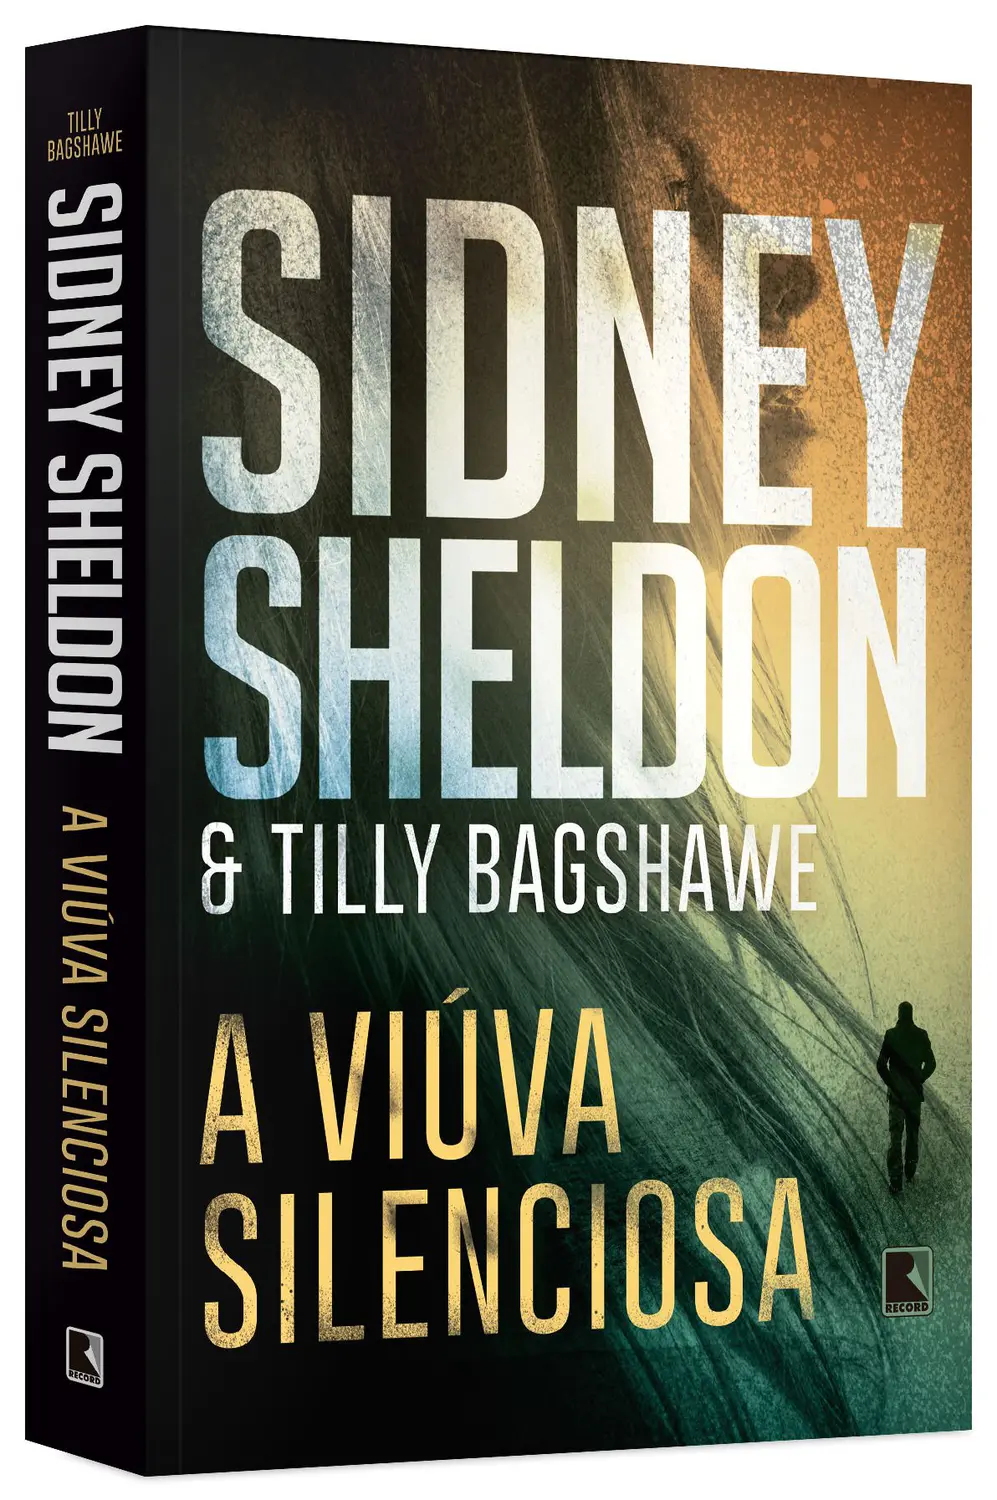 A Viúva Silenciosa, de Sidney Sheldon e Tilly Bagshawe